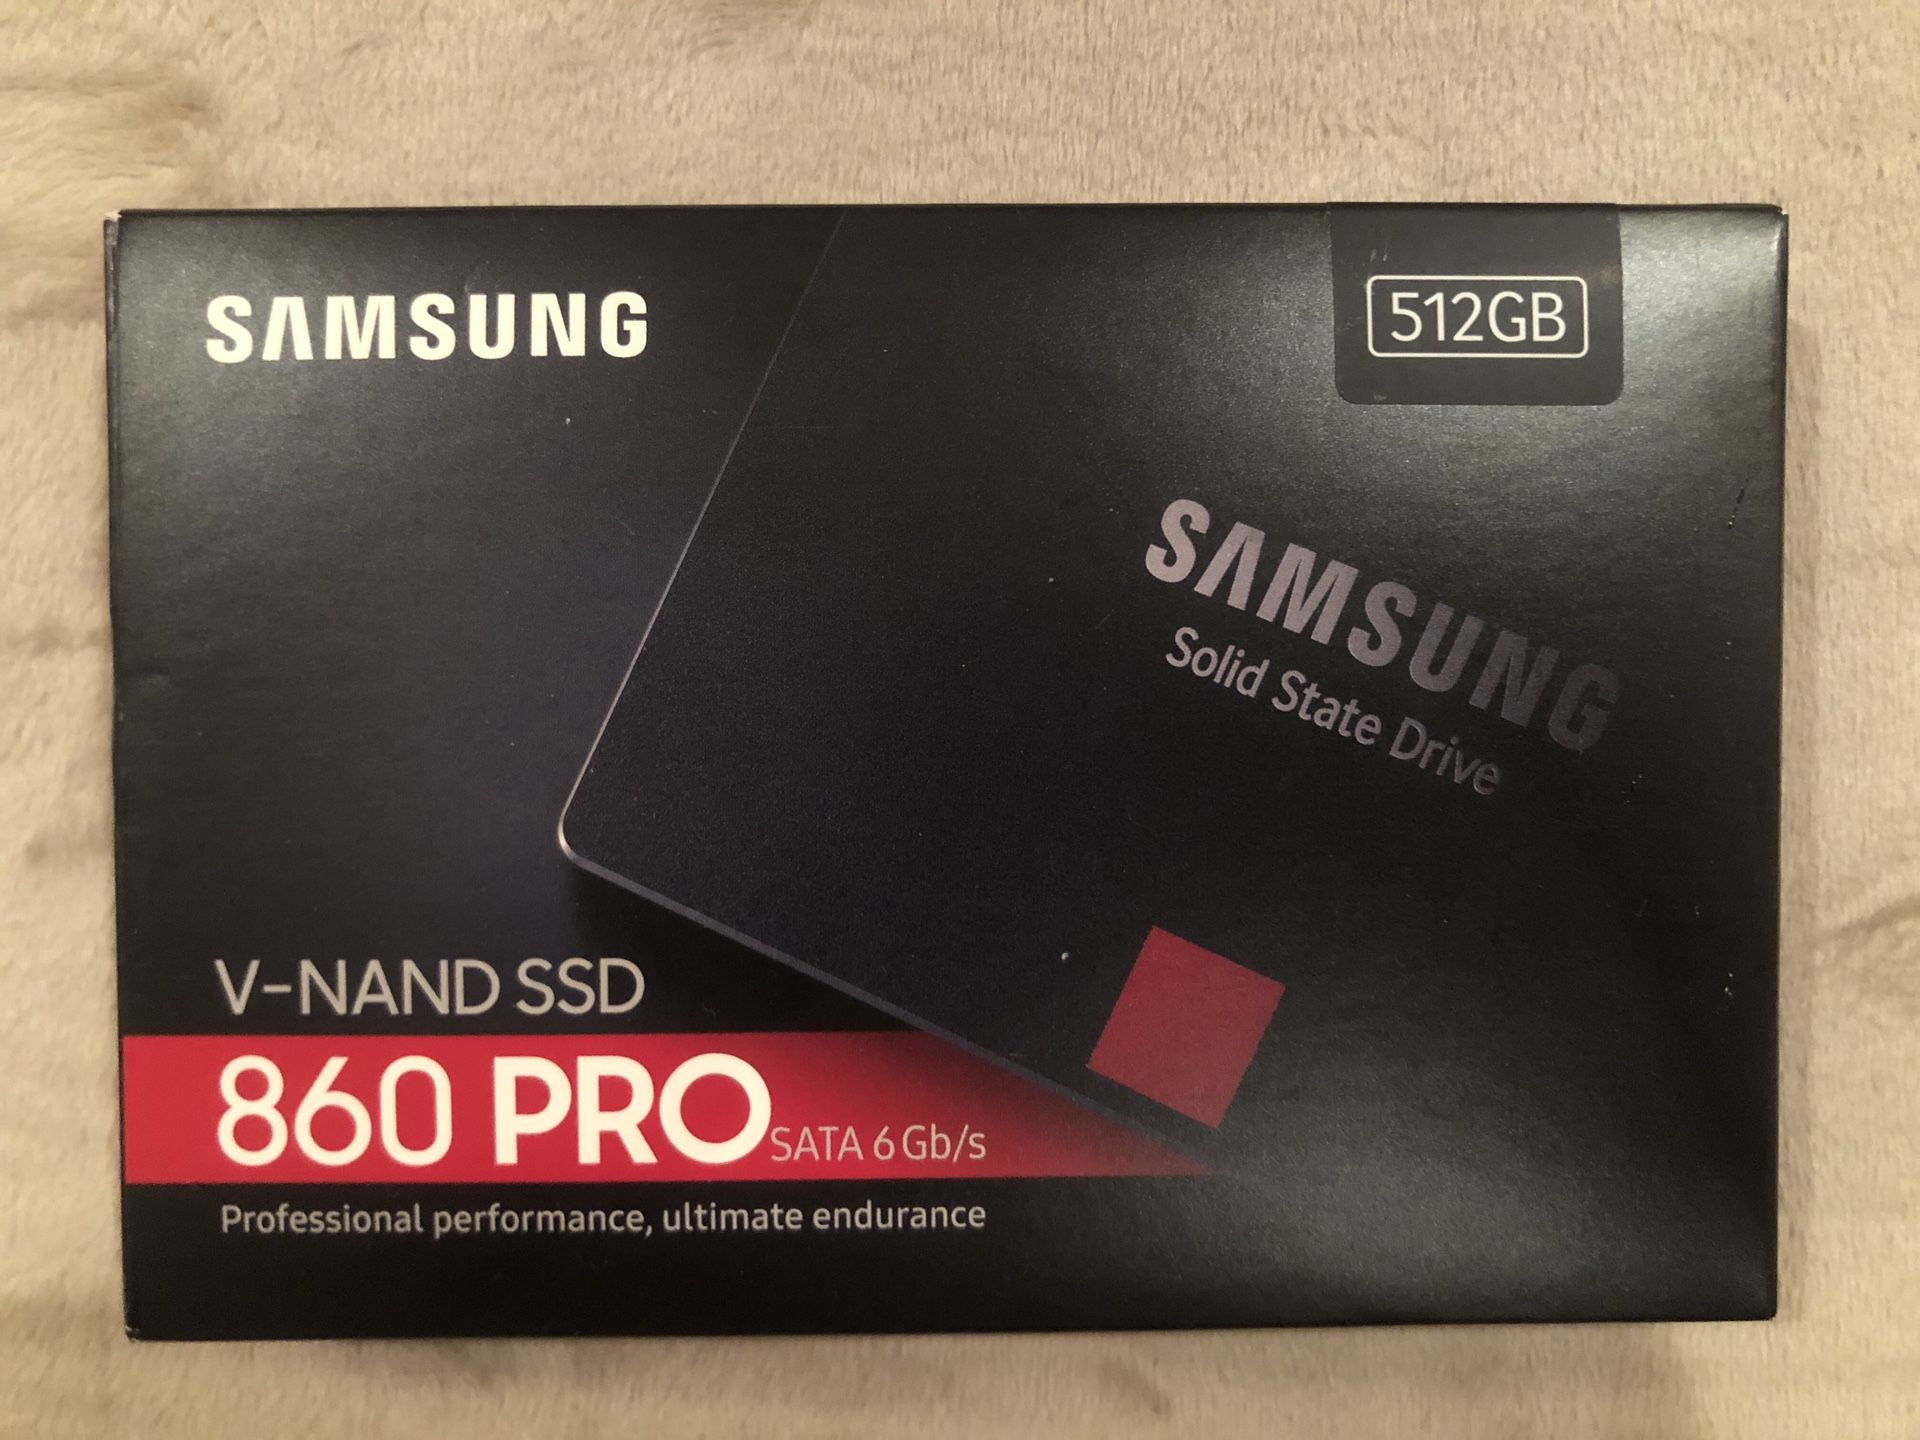 “New / Unopened” Samsung 860 Pro V-NAND SSD 512G